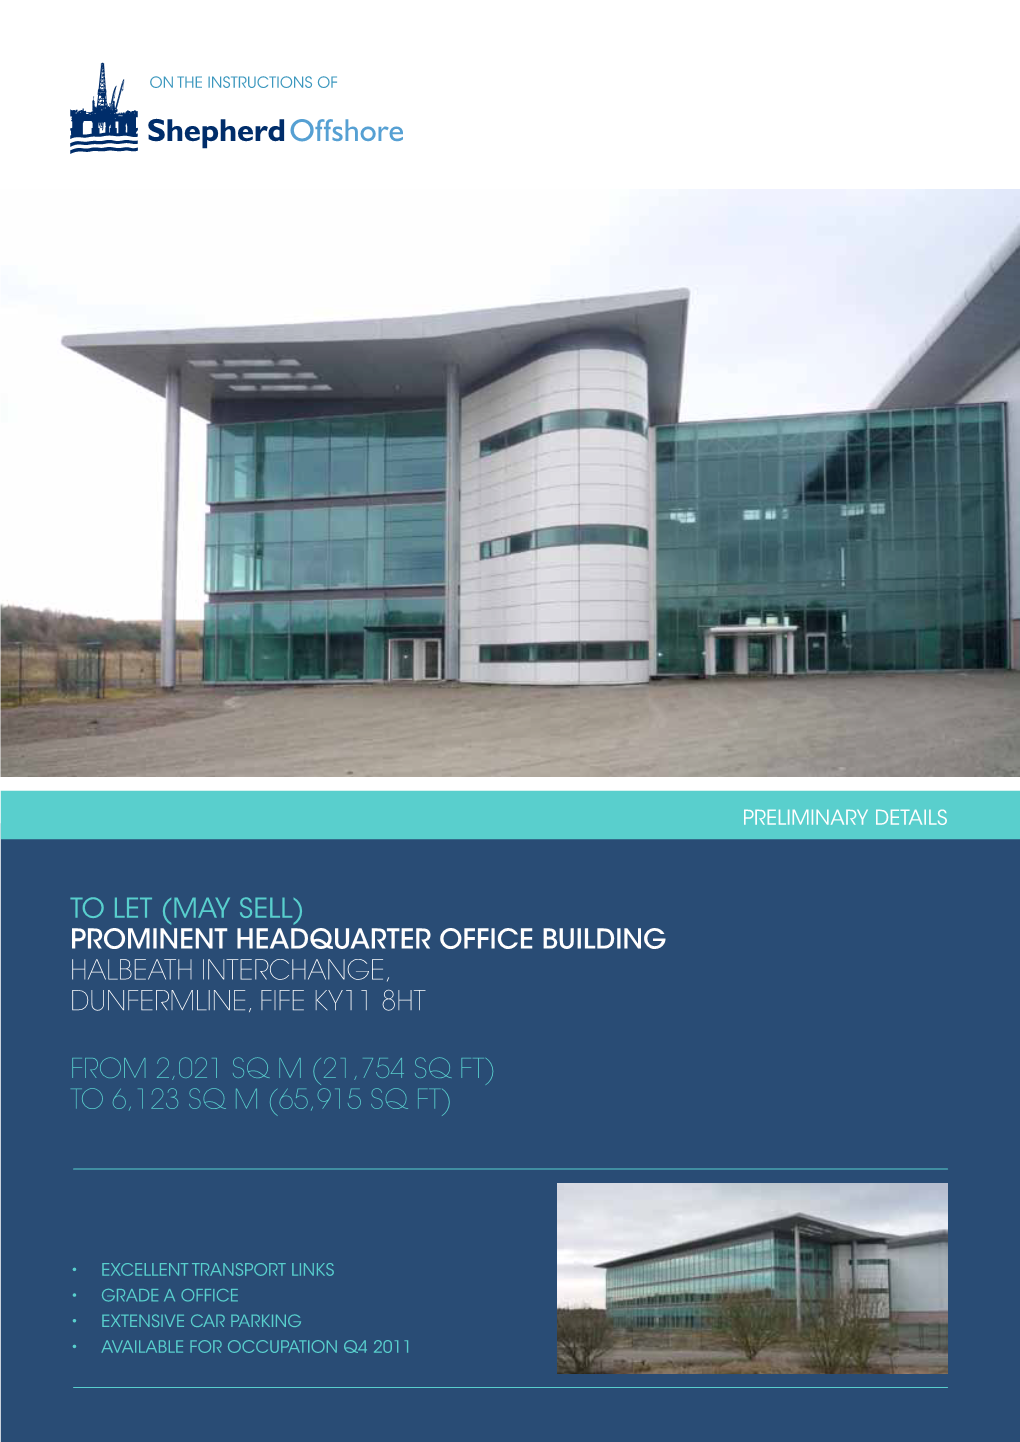 Prominent Headquarter Office Building Halbeath Interchange, Dunfermline, Fife Ky11 8Ht